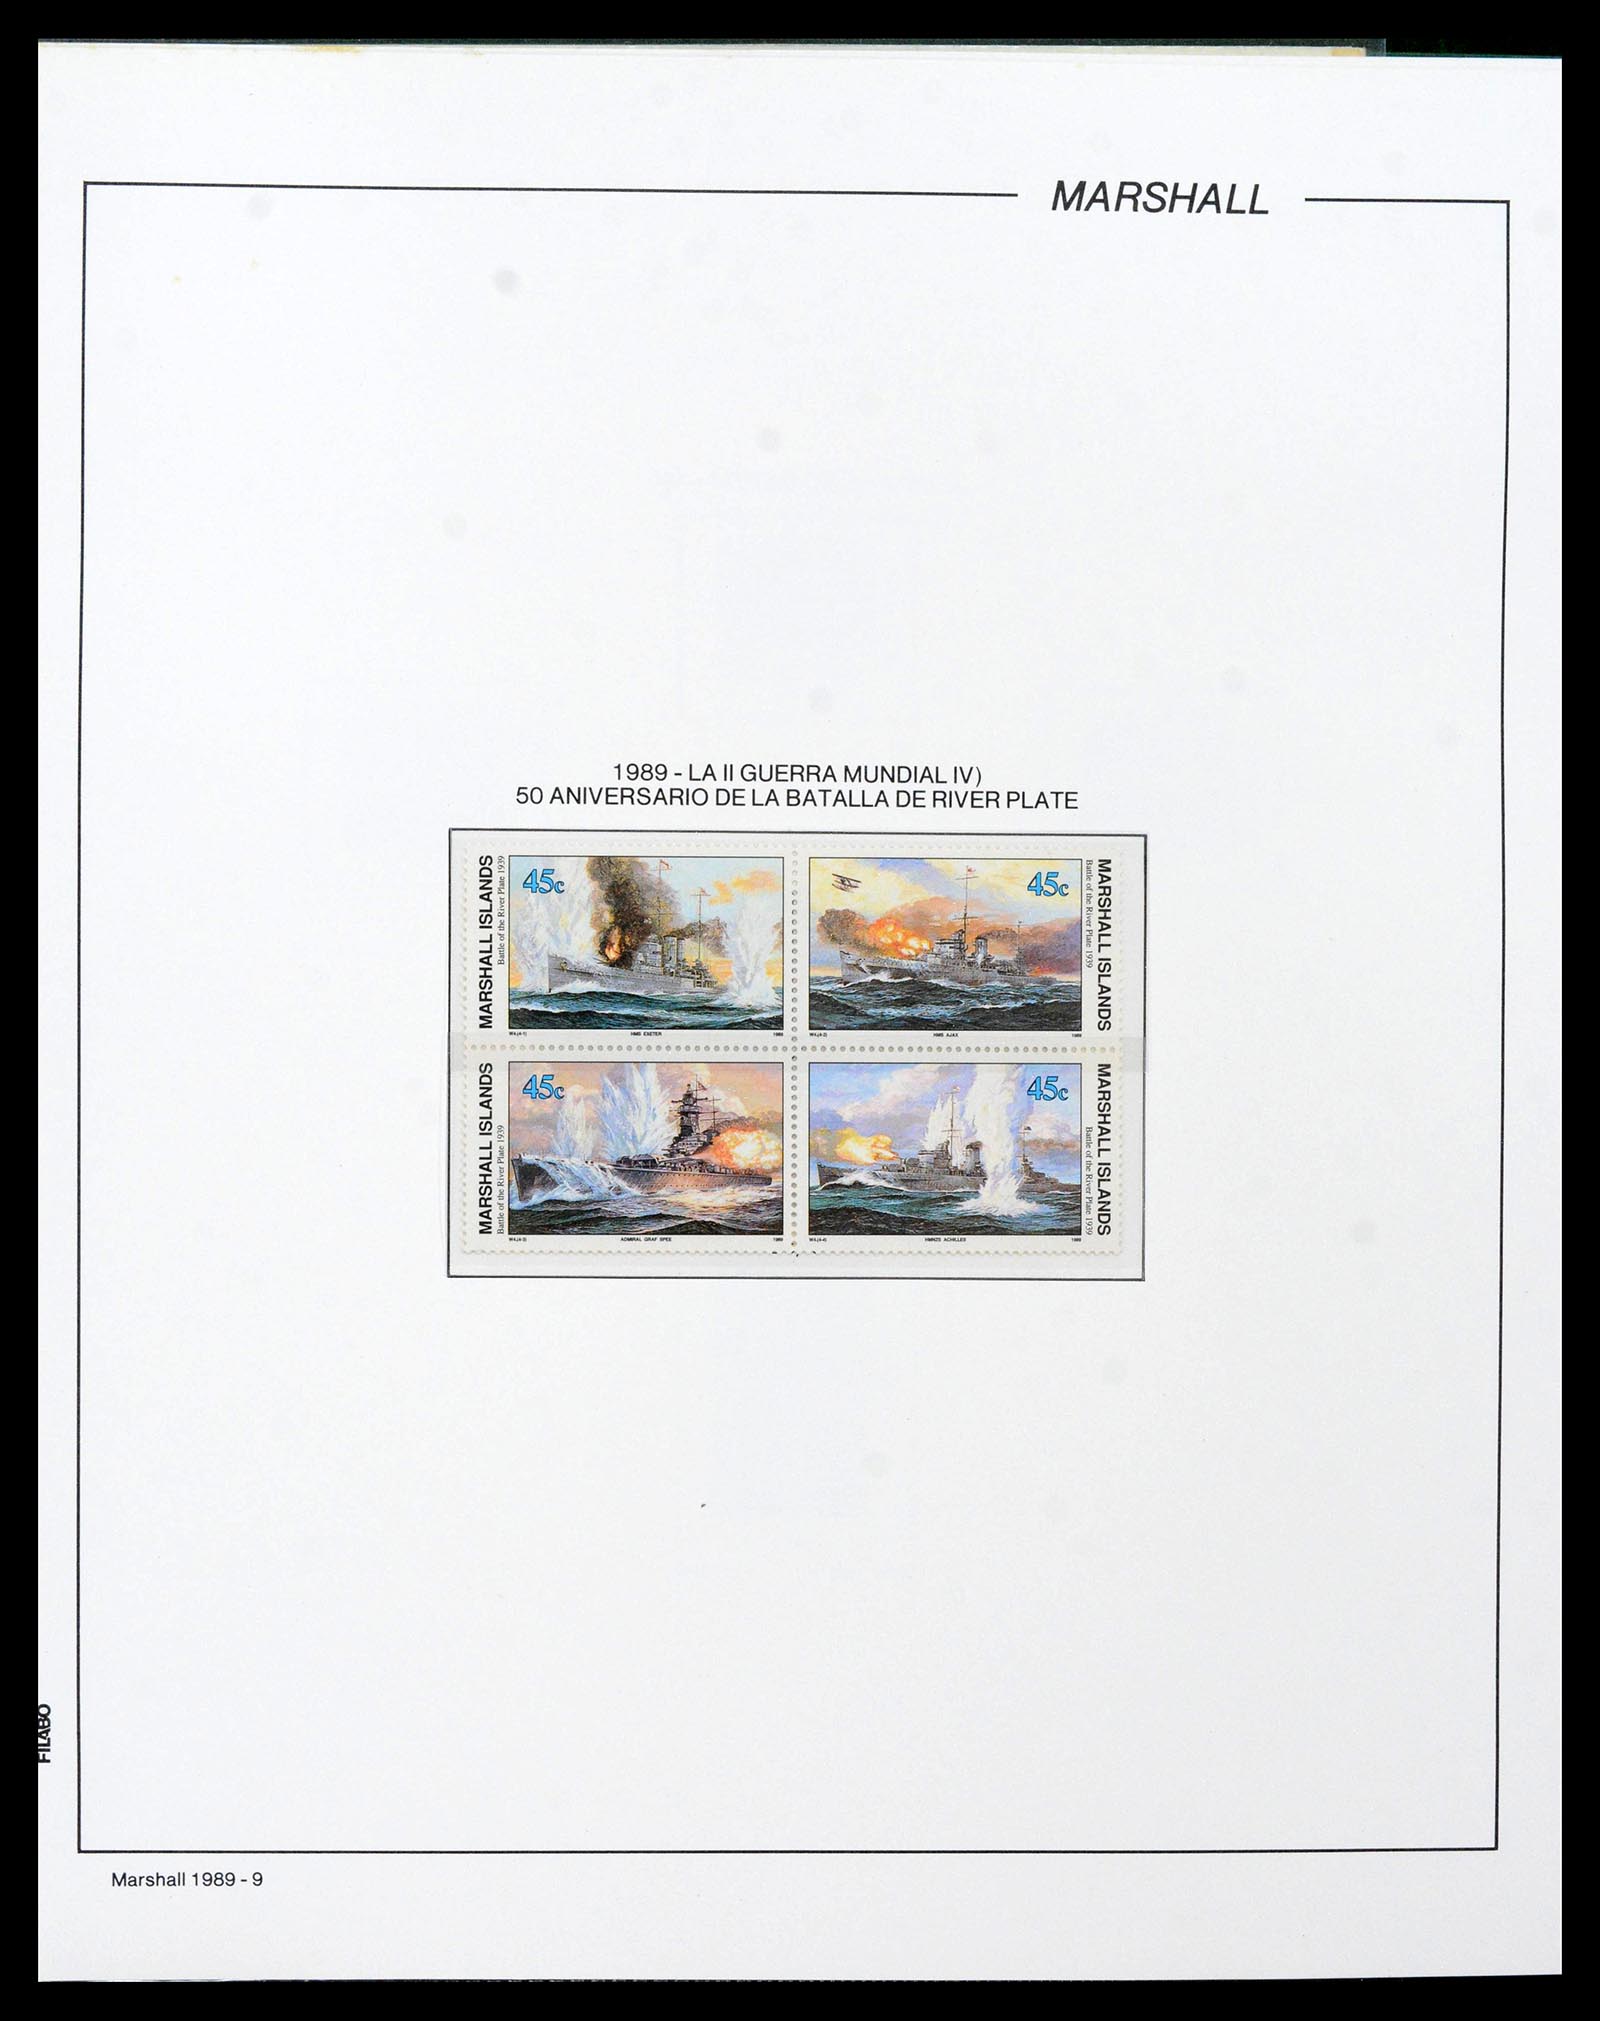 39222 0143 - Stamp collection 39222 Palau, Micronesia and Marshall islands 1980-1995.